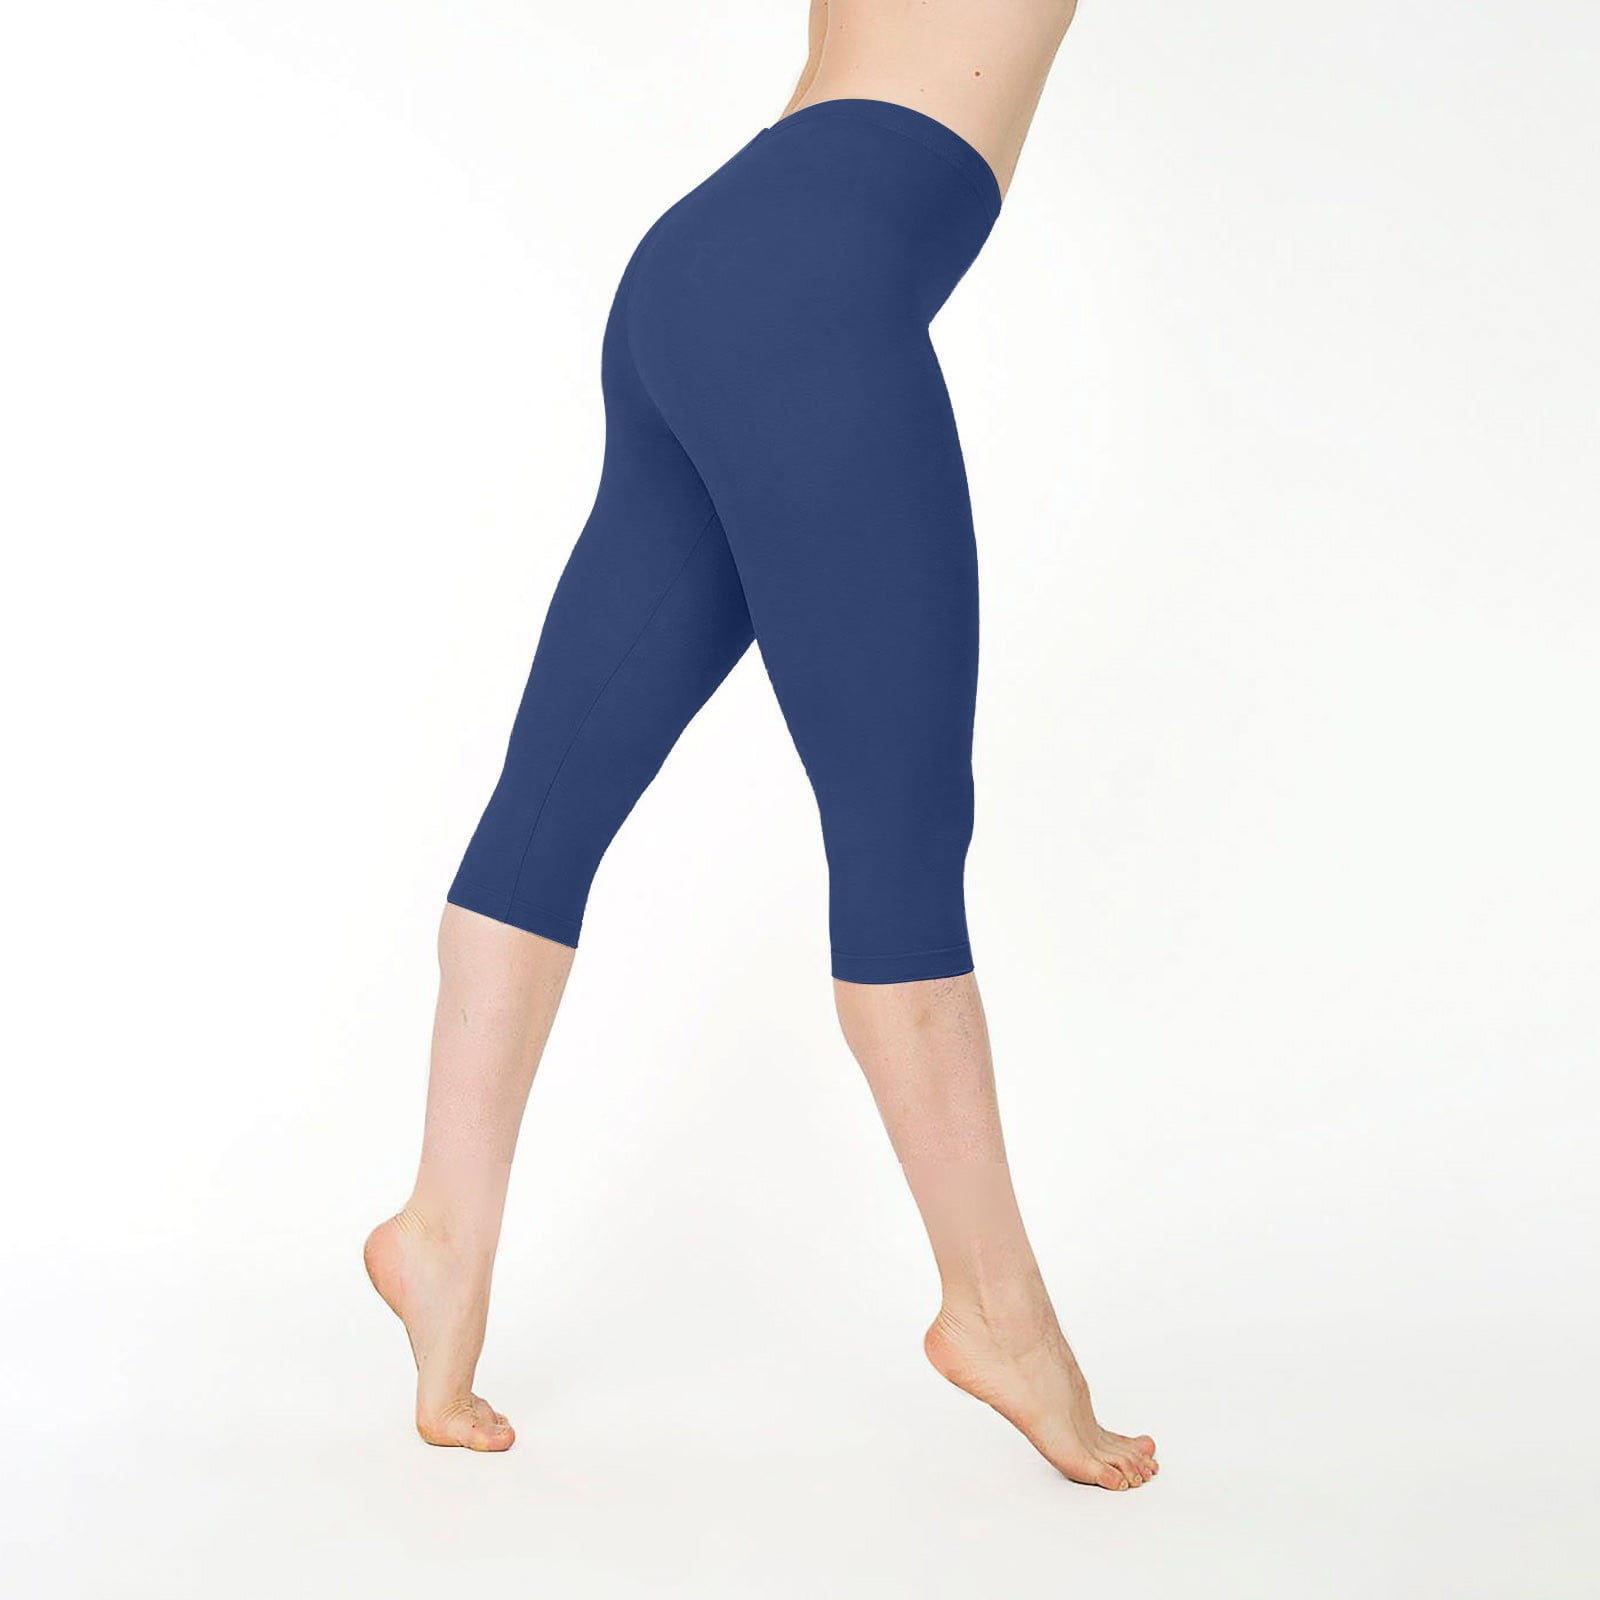 Khaki pants for women Women Warm Stretch Yoga Leggings High Waist